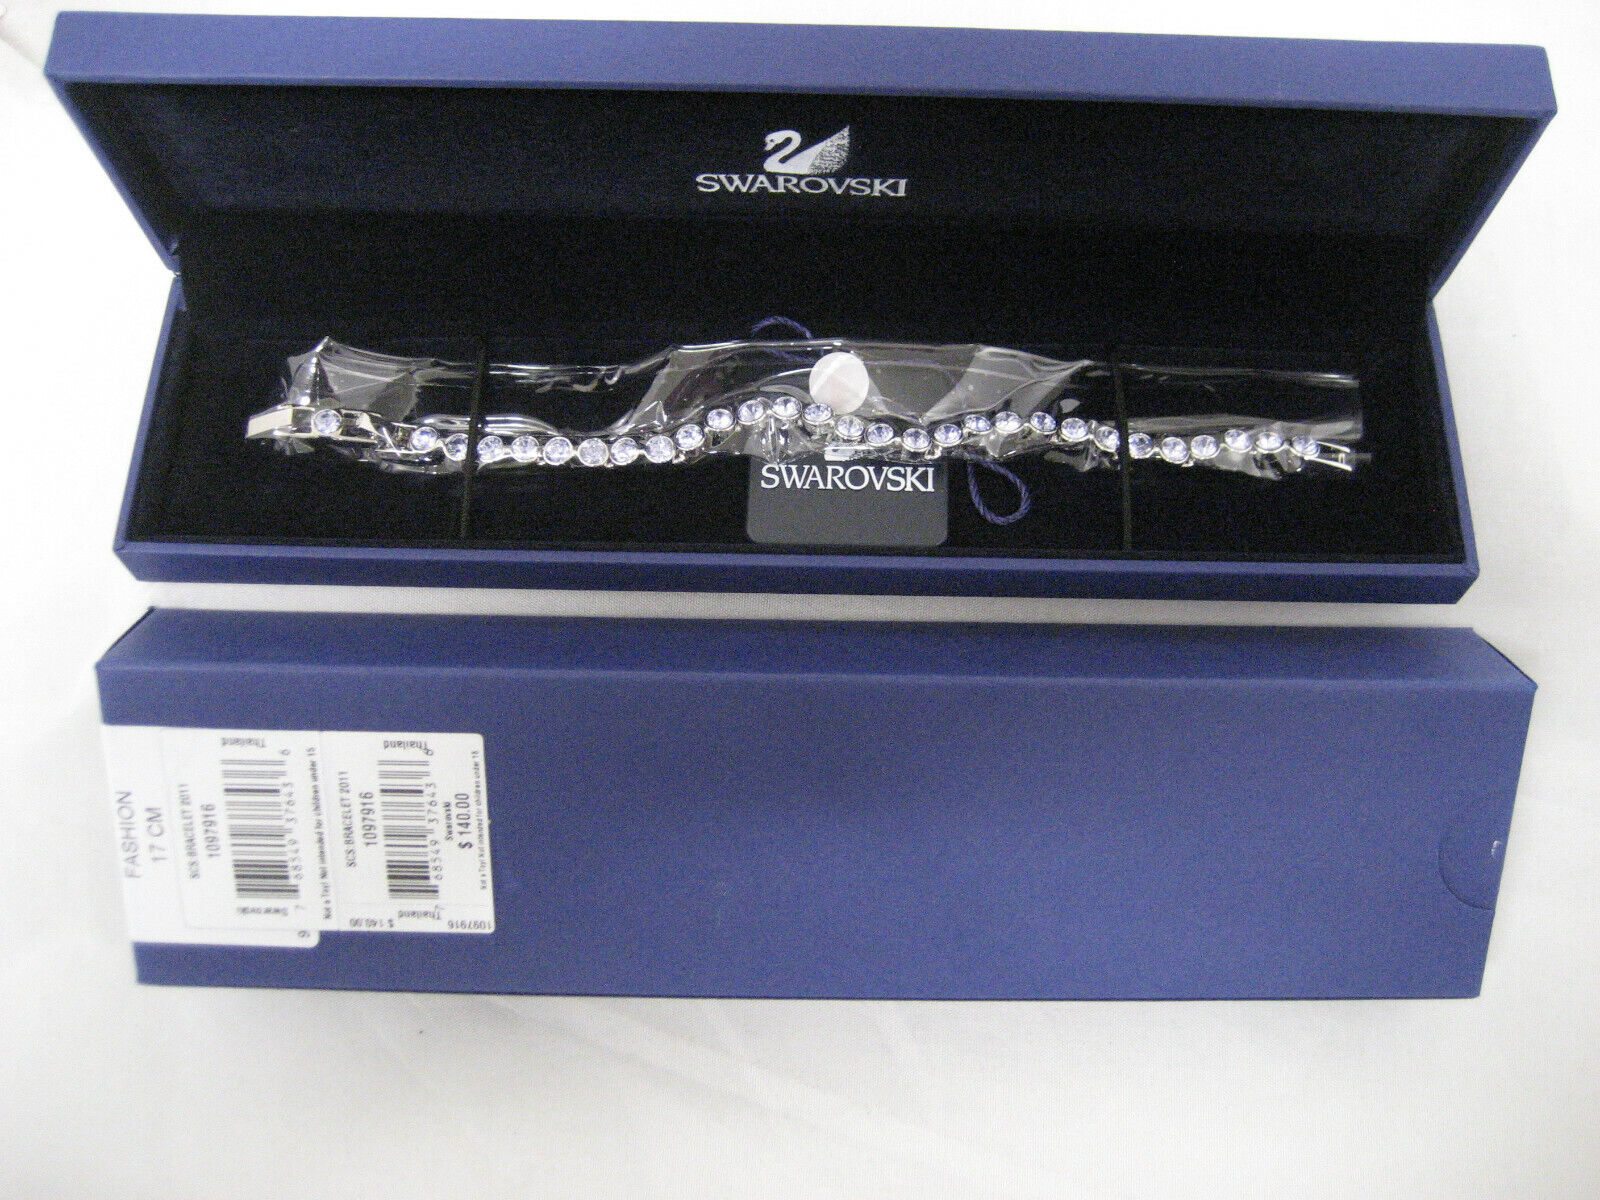 Swarovski SCS 2011 Arctic Bracelet 1097916  (New In Original Box) Retail $140.00